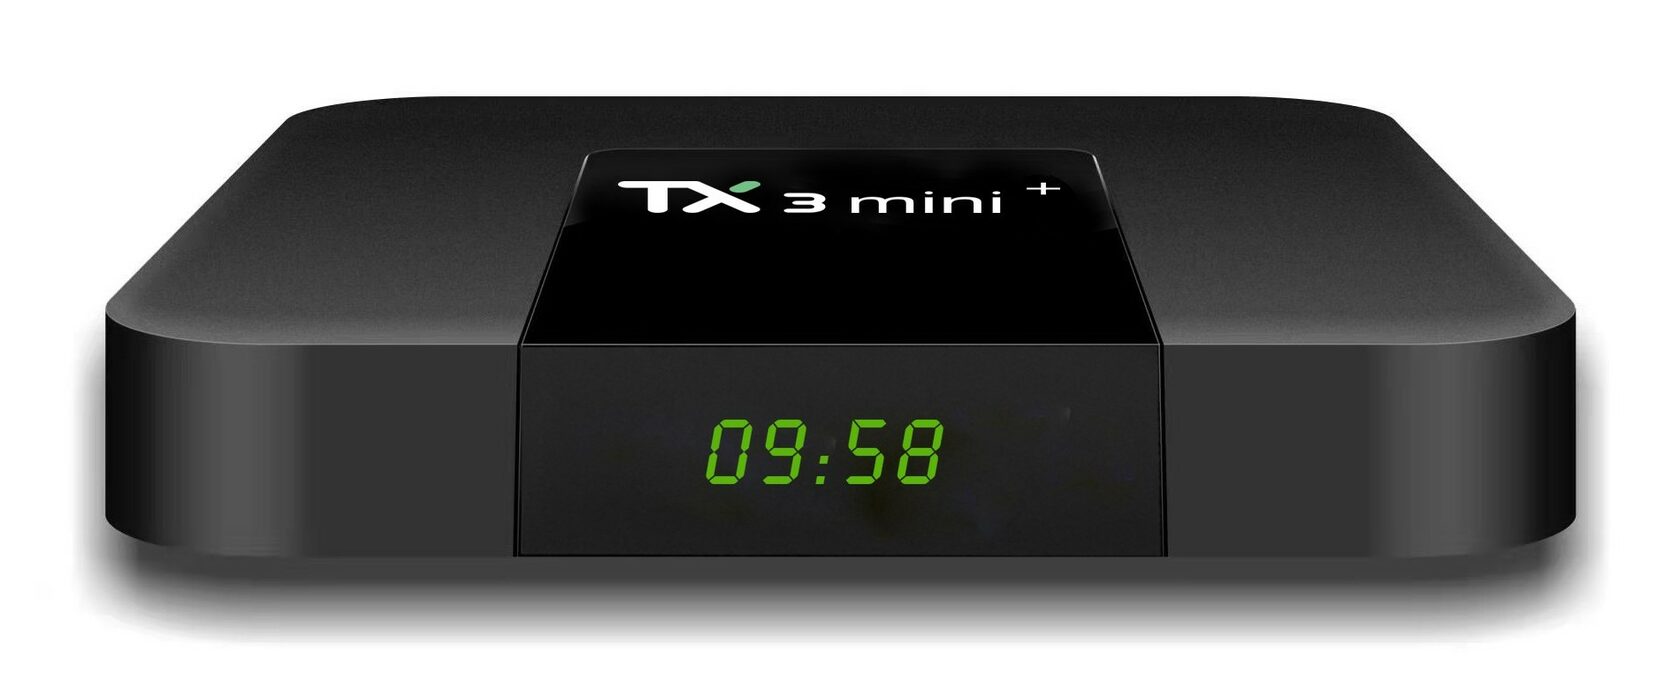 Самые лучшие приставки смарт тв. Медиаплеер Tanix tx3 Mini 2/16gb. Медиаплеер Tanix tx3 Mini 1/8gb. Приставка тв3 Mini 2\16. Smart TV приставка tx3 Mini 2/16.